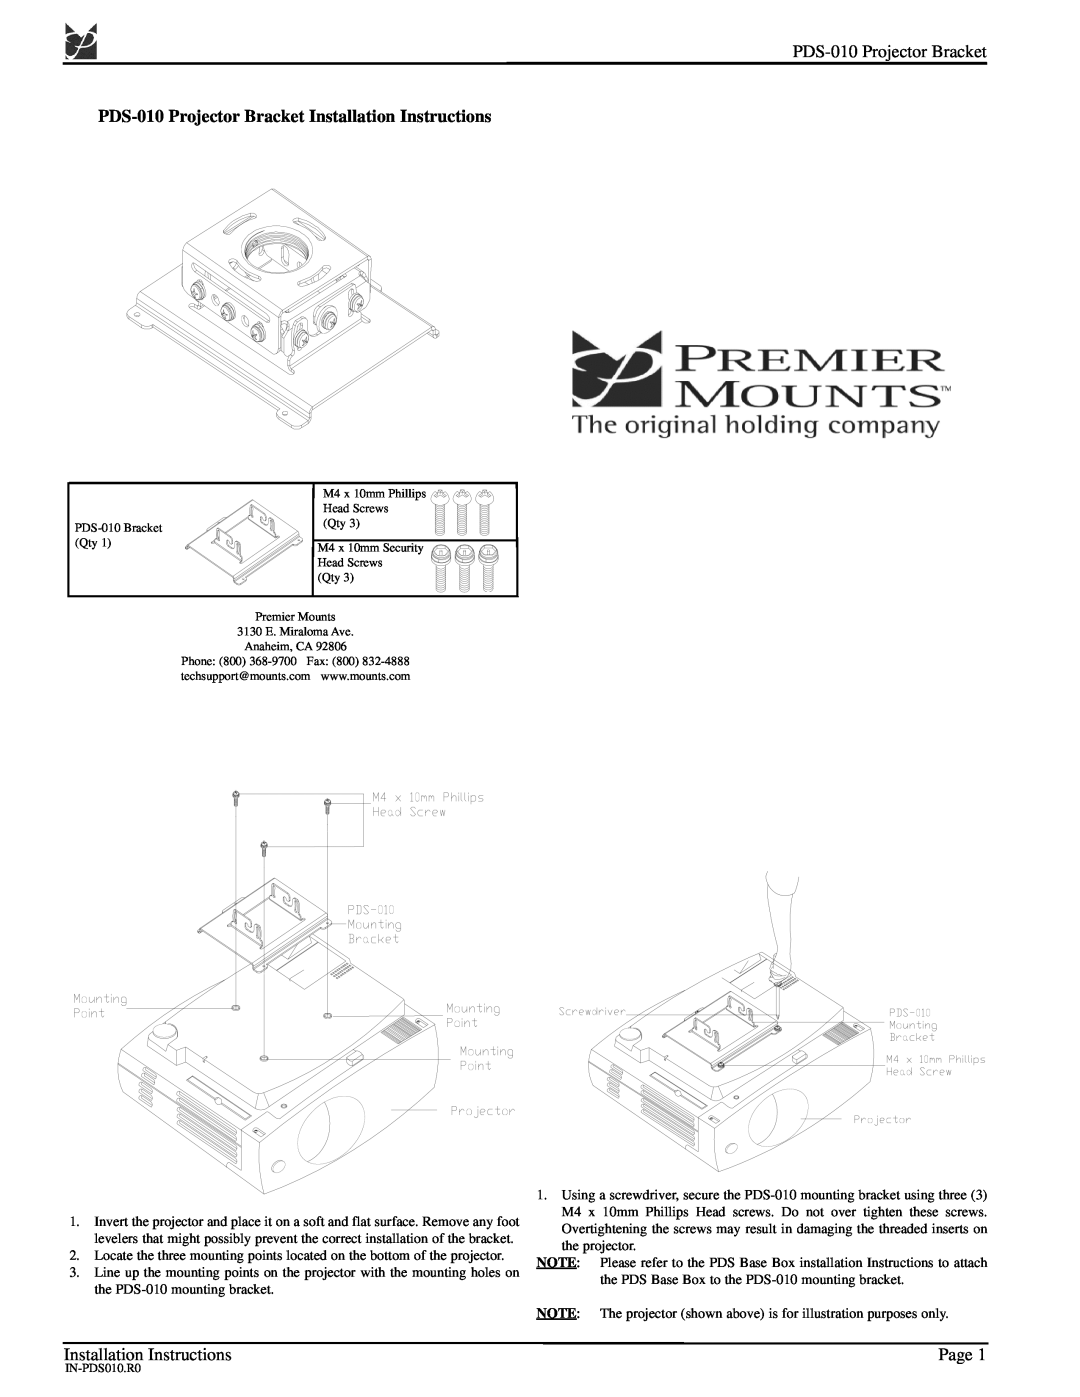 Premier Mounts installation instructions PDS-010 Projector Bracket Installation Instructions, Page 